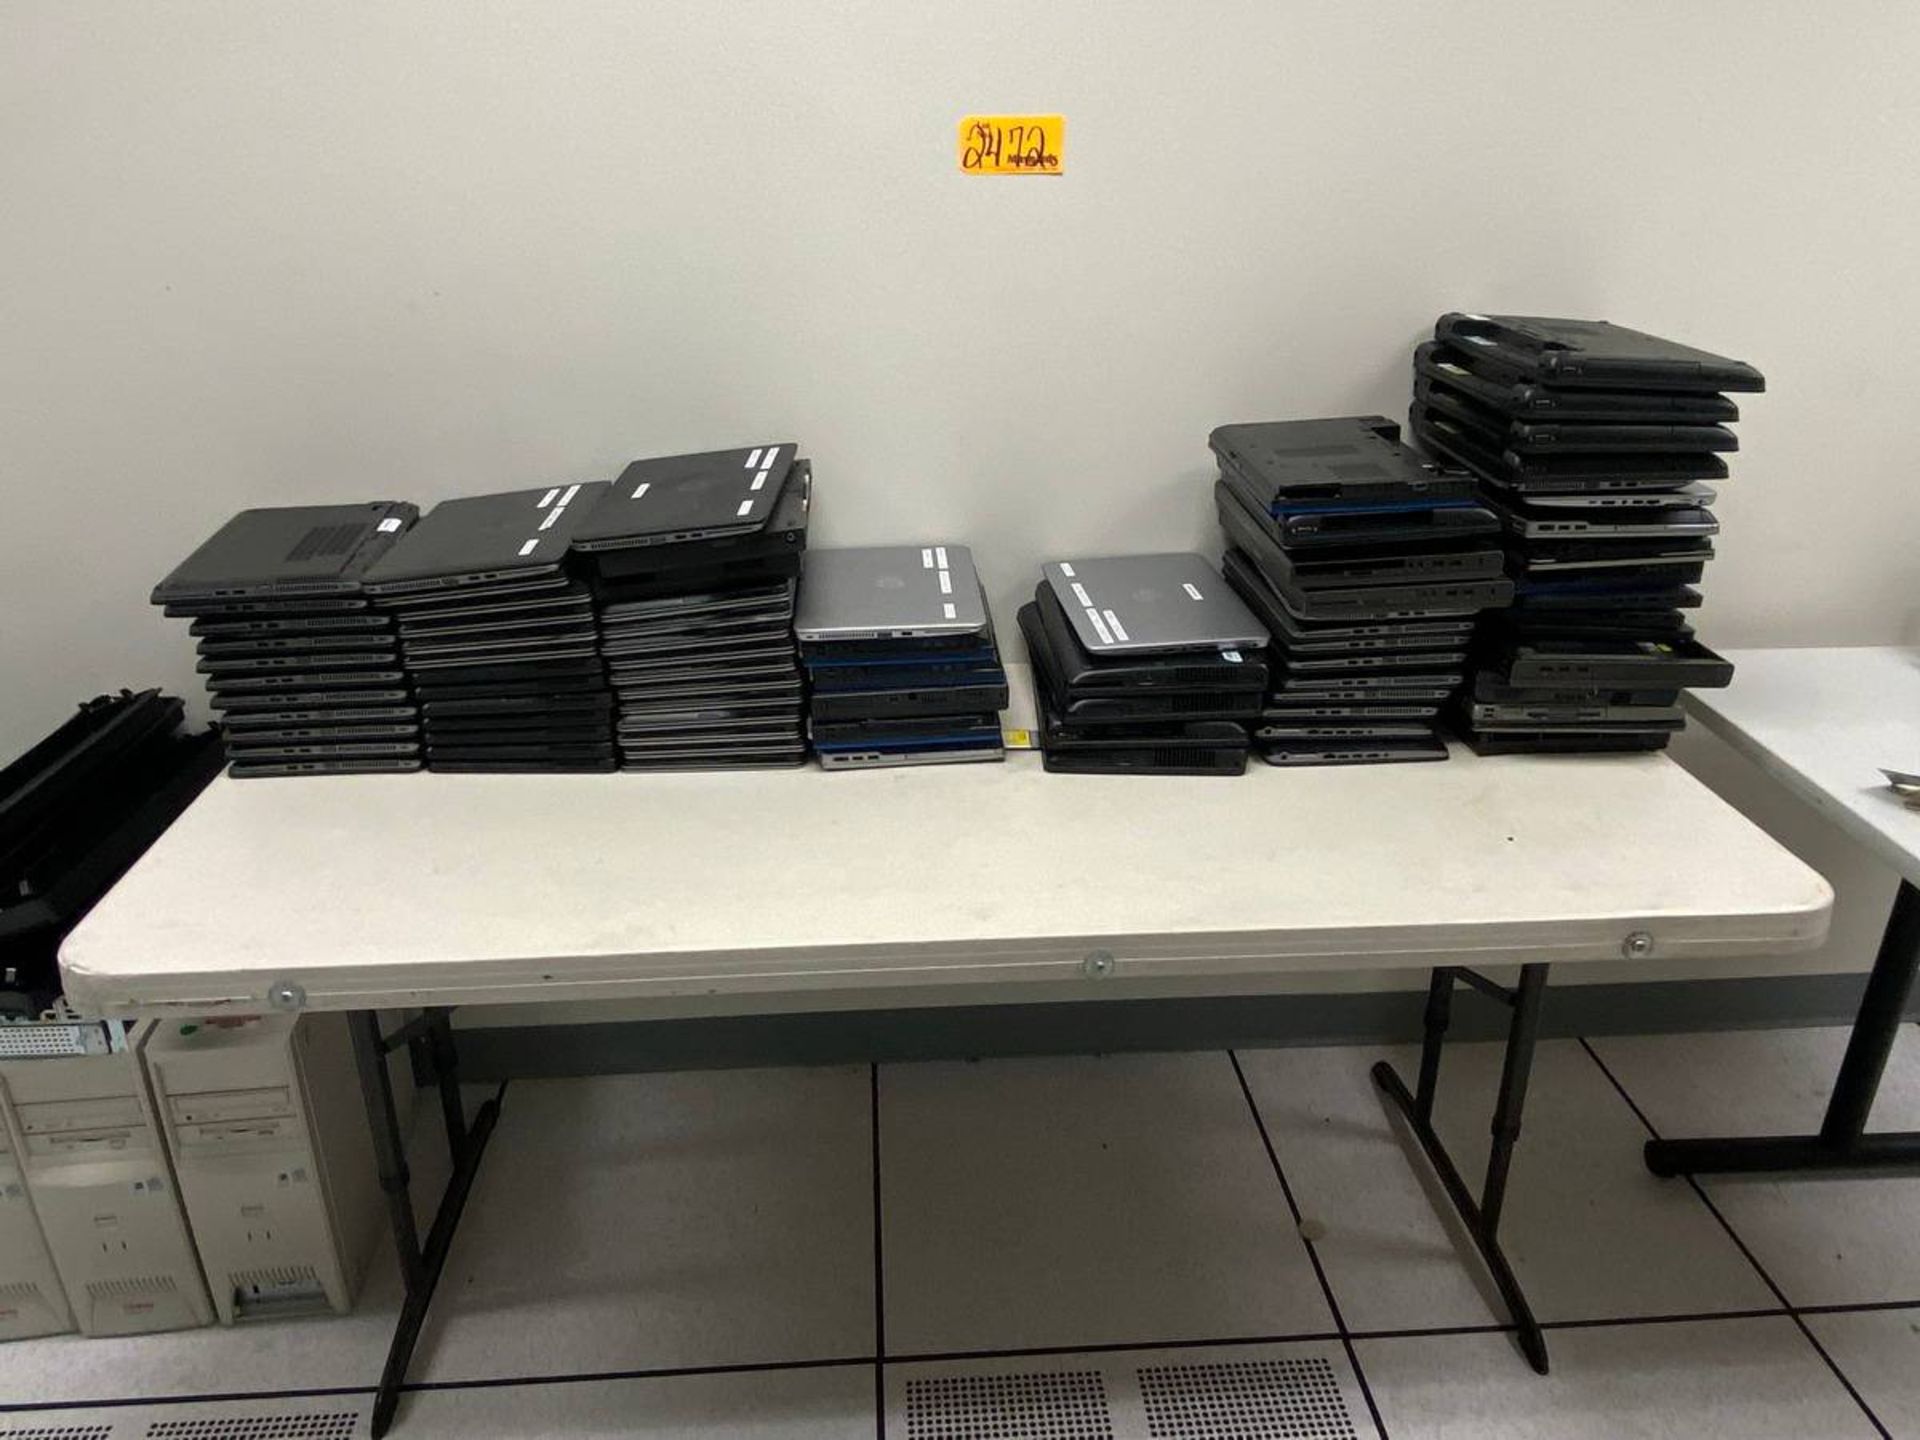 Assorted Laptops